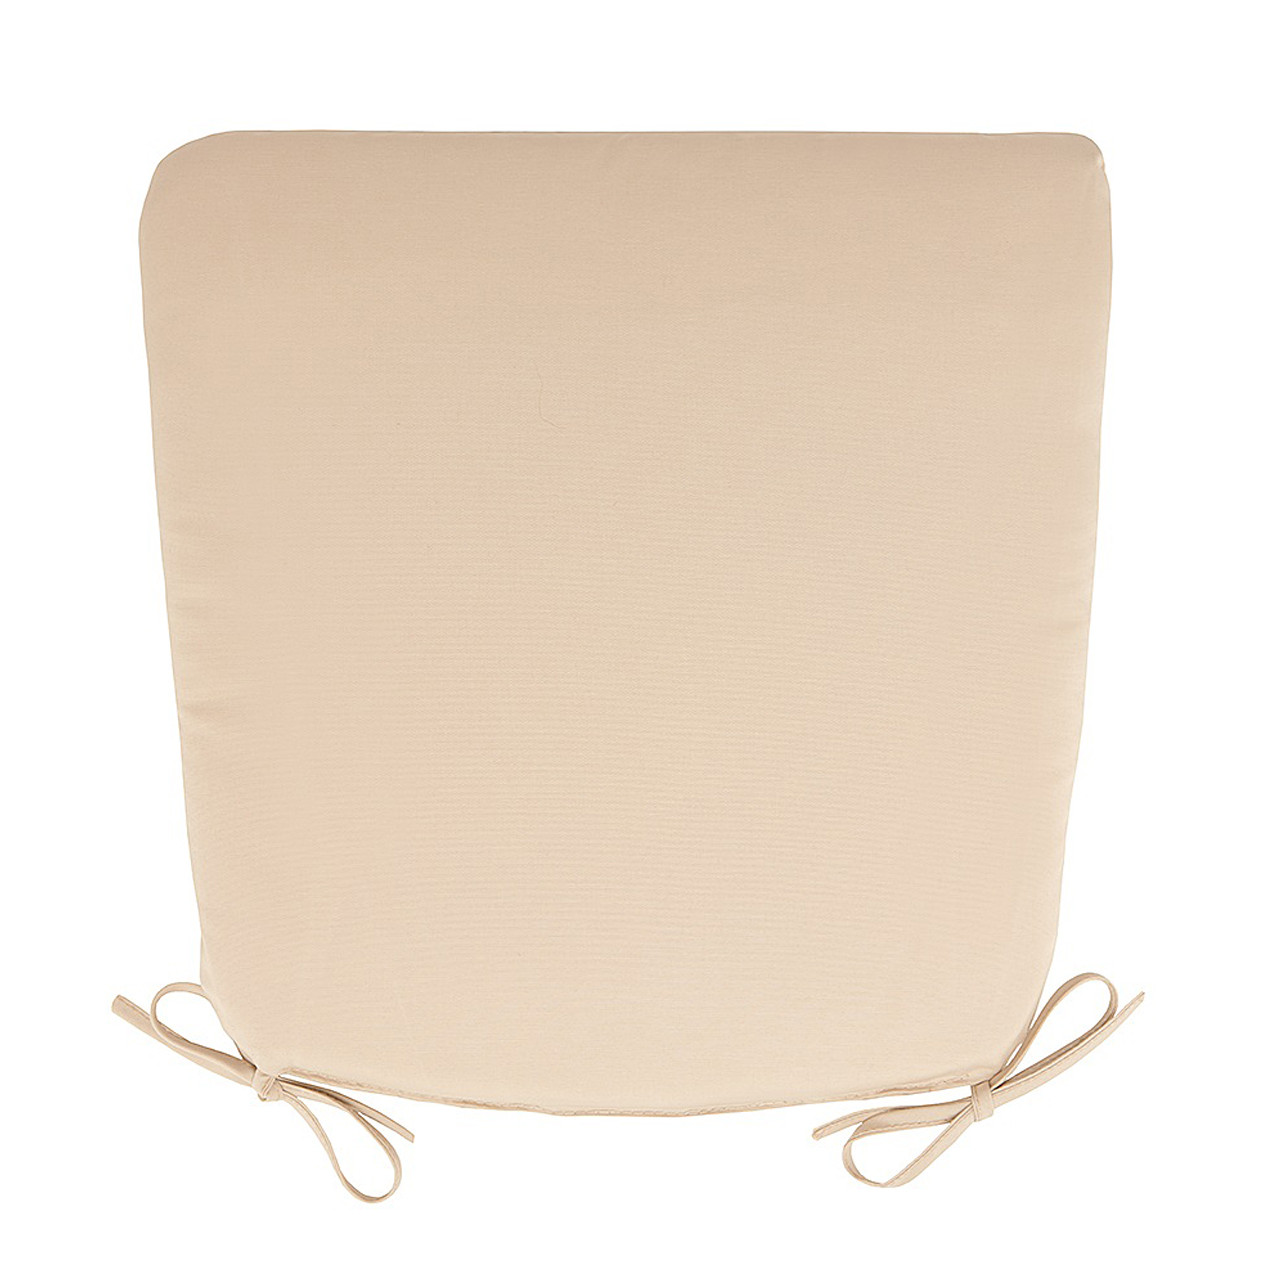 18.5 x 18 in. Single-Welt Wicker Seat Pad Cushion